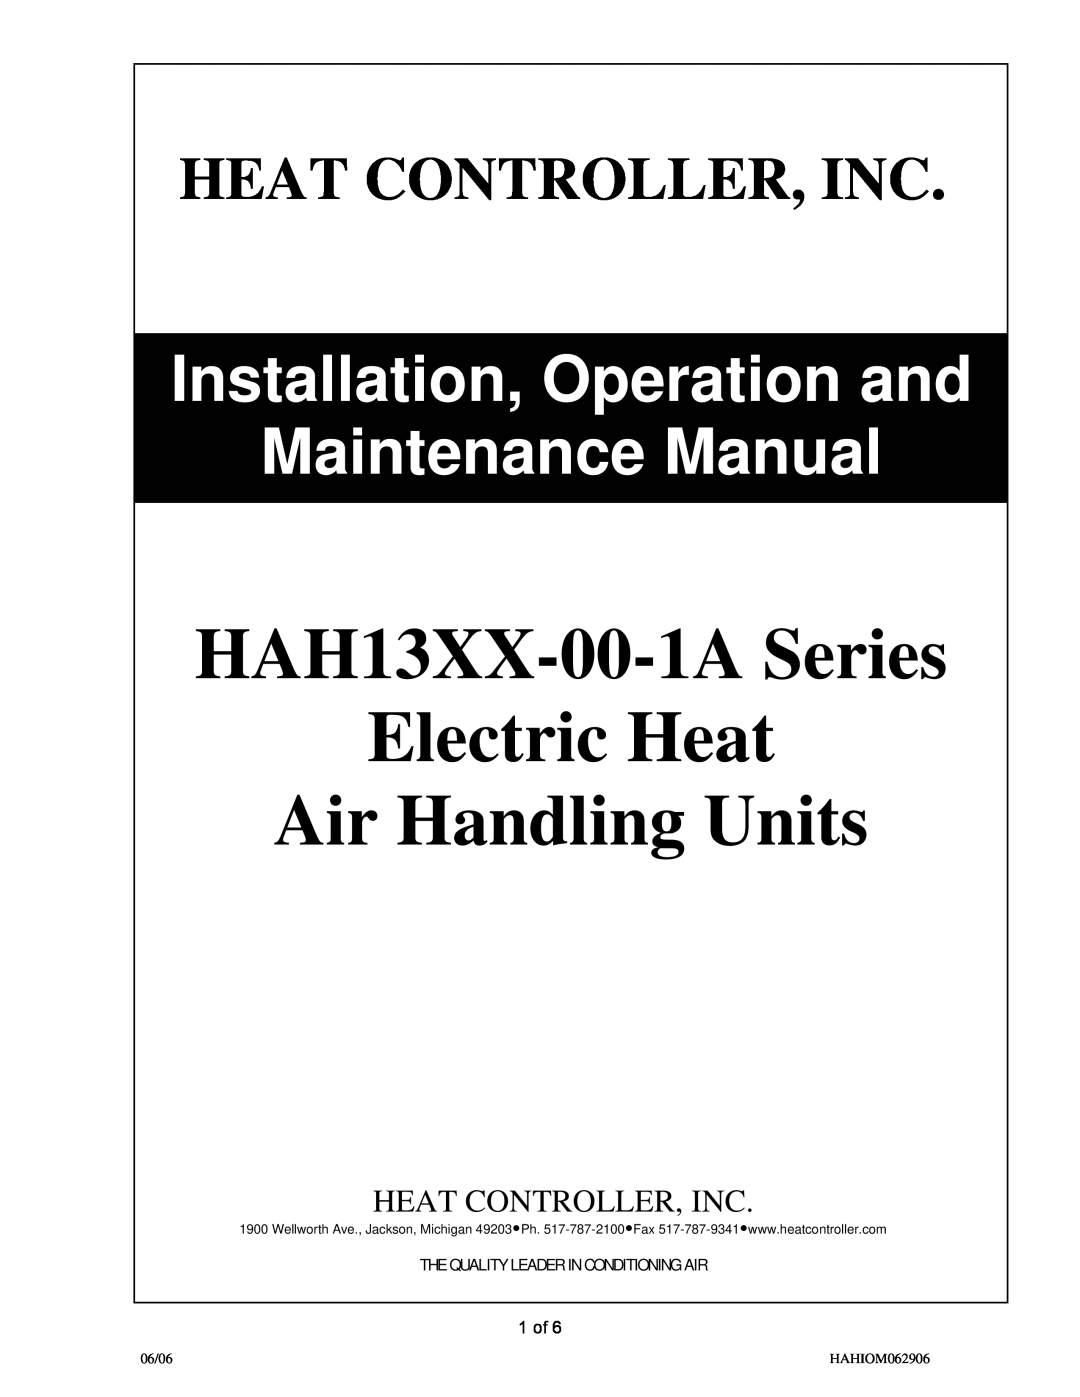 Heat Controller manual HAH13XX-00-1ASeries Electric Heat, Air Handling Units, Heat Controller, Inc, 06/06, HAHIOM062906 